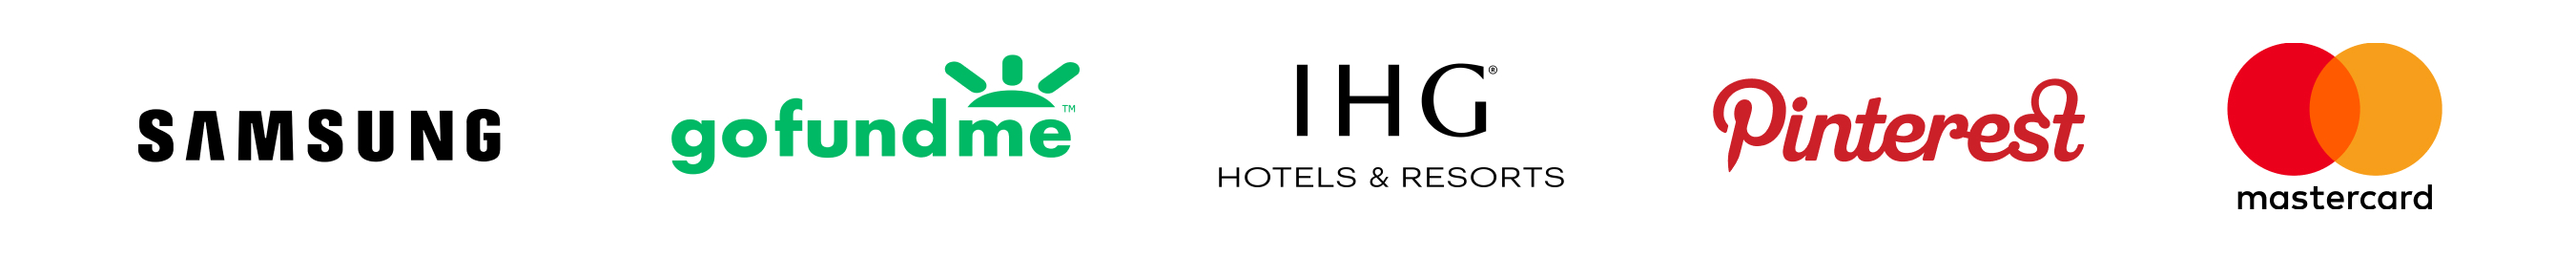 Logo Samsung, logo gofundme, logo IGH Hotel and Resorts, logo Pintrest, logo Mastercard